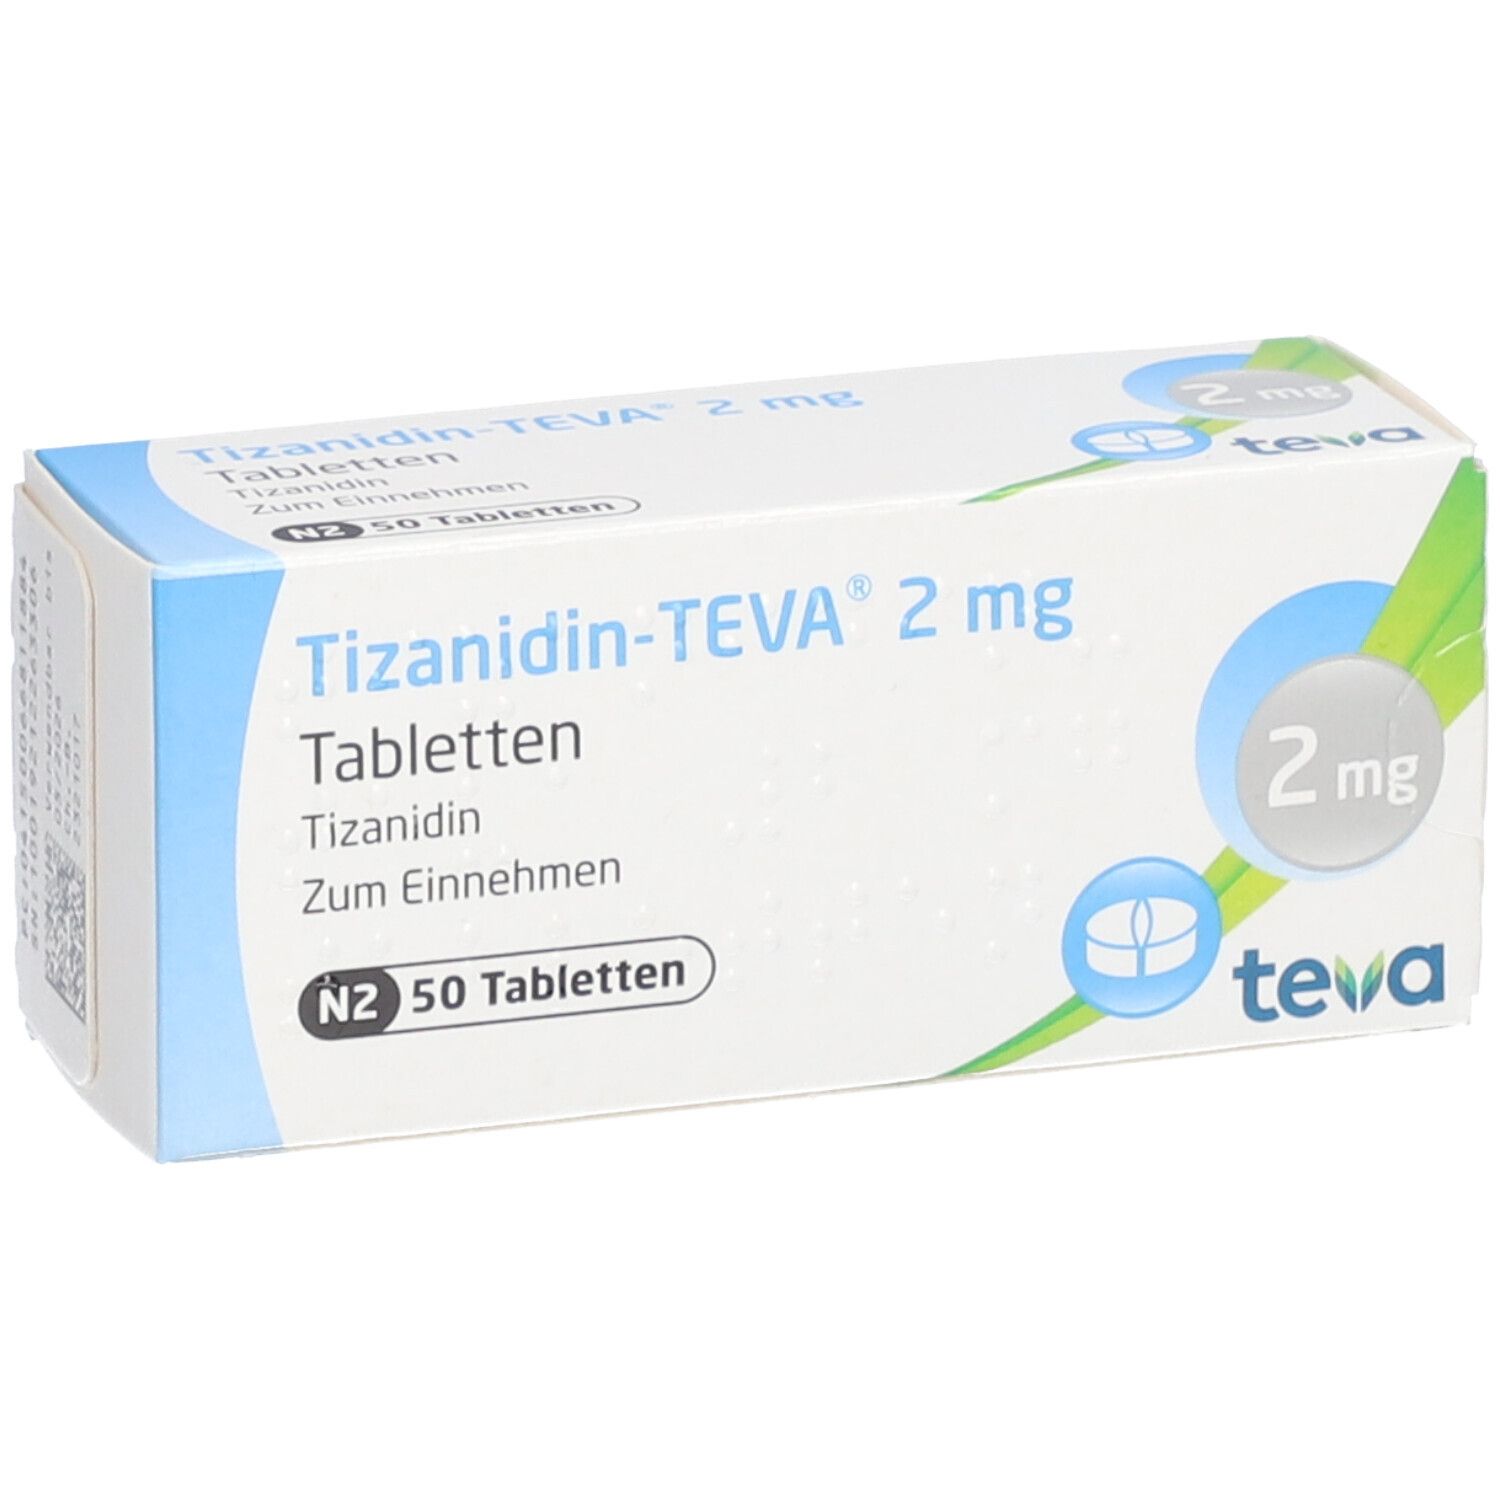 Tizanidin-TEVA® 2 mg 100 - shop-apotheke.com